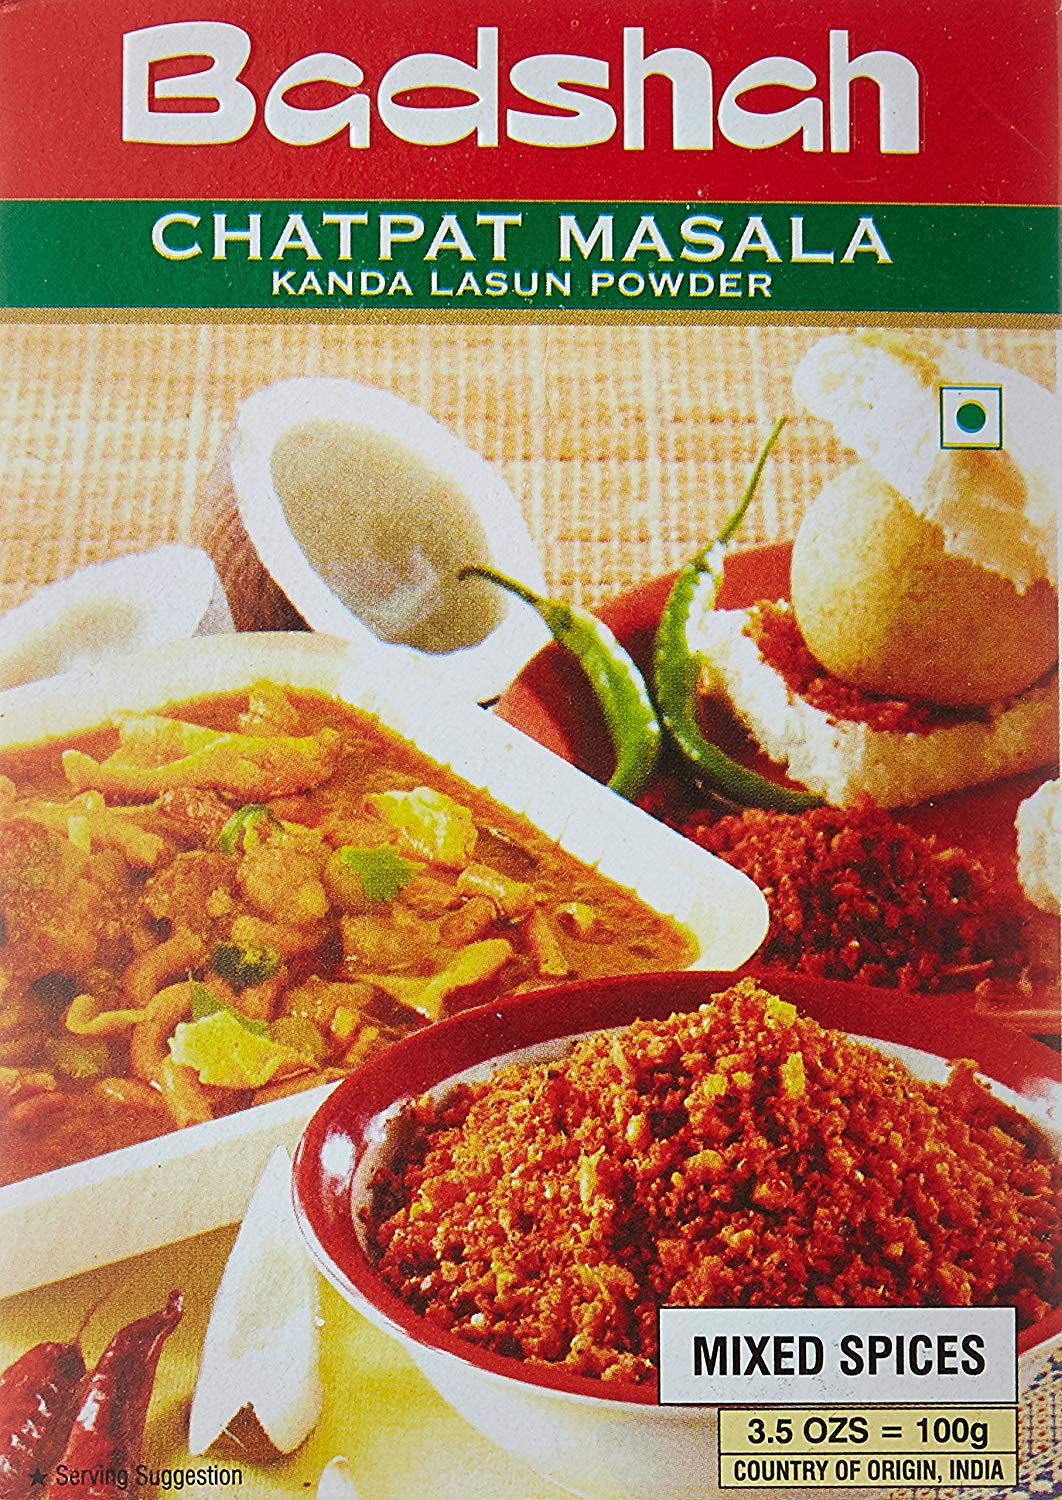 Badshah Chatpat Masala 100 g (Kanda Lasun Powder)